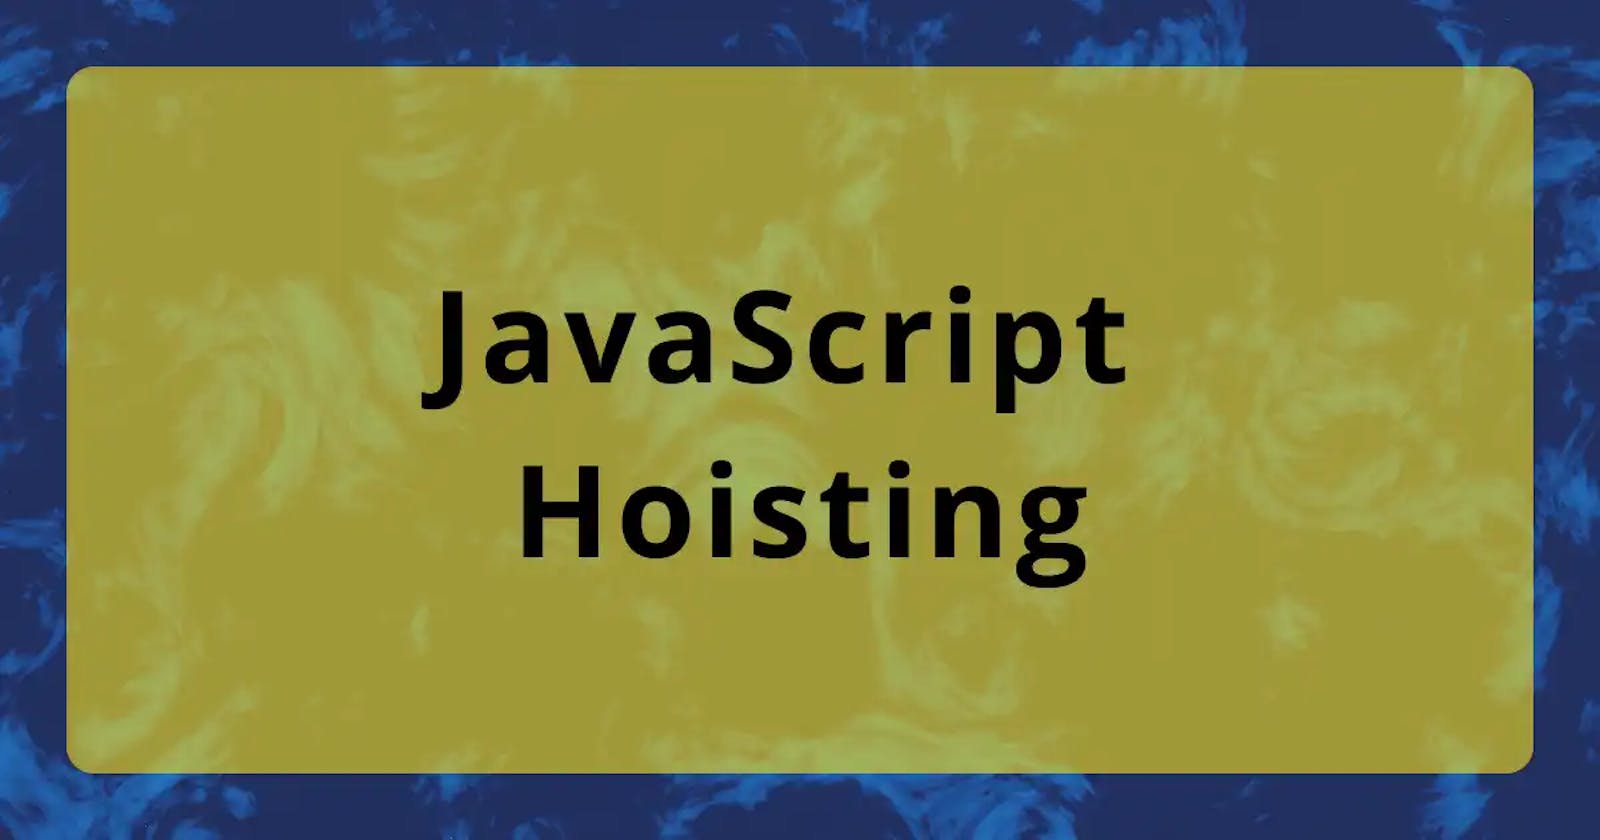 What is hoisting in JavaScript?